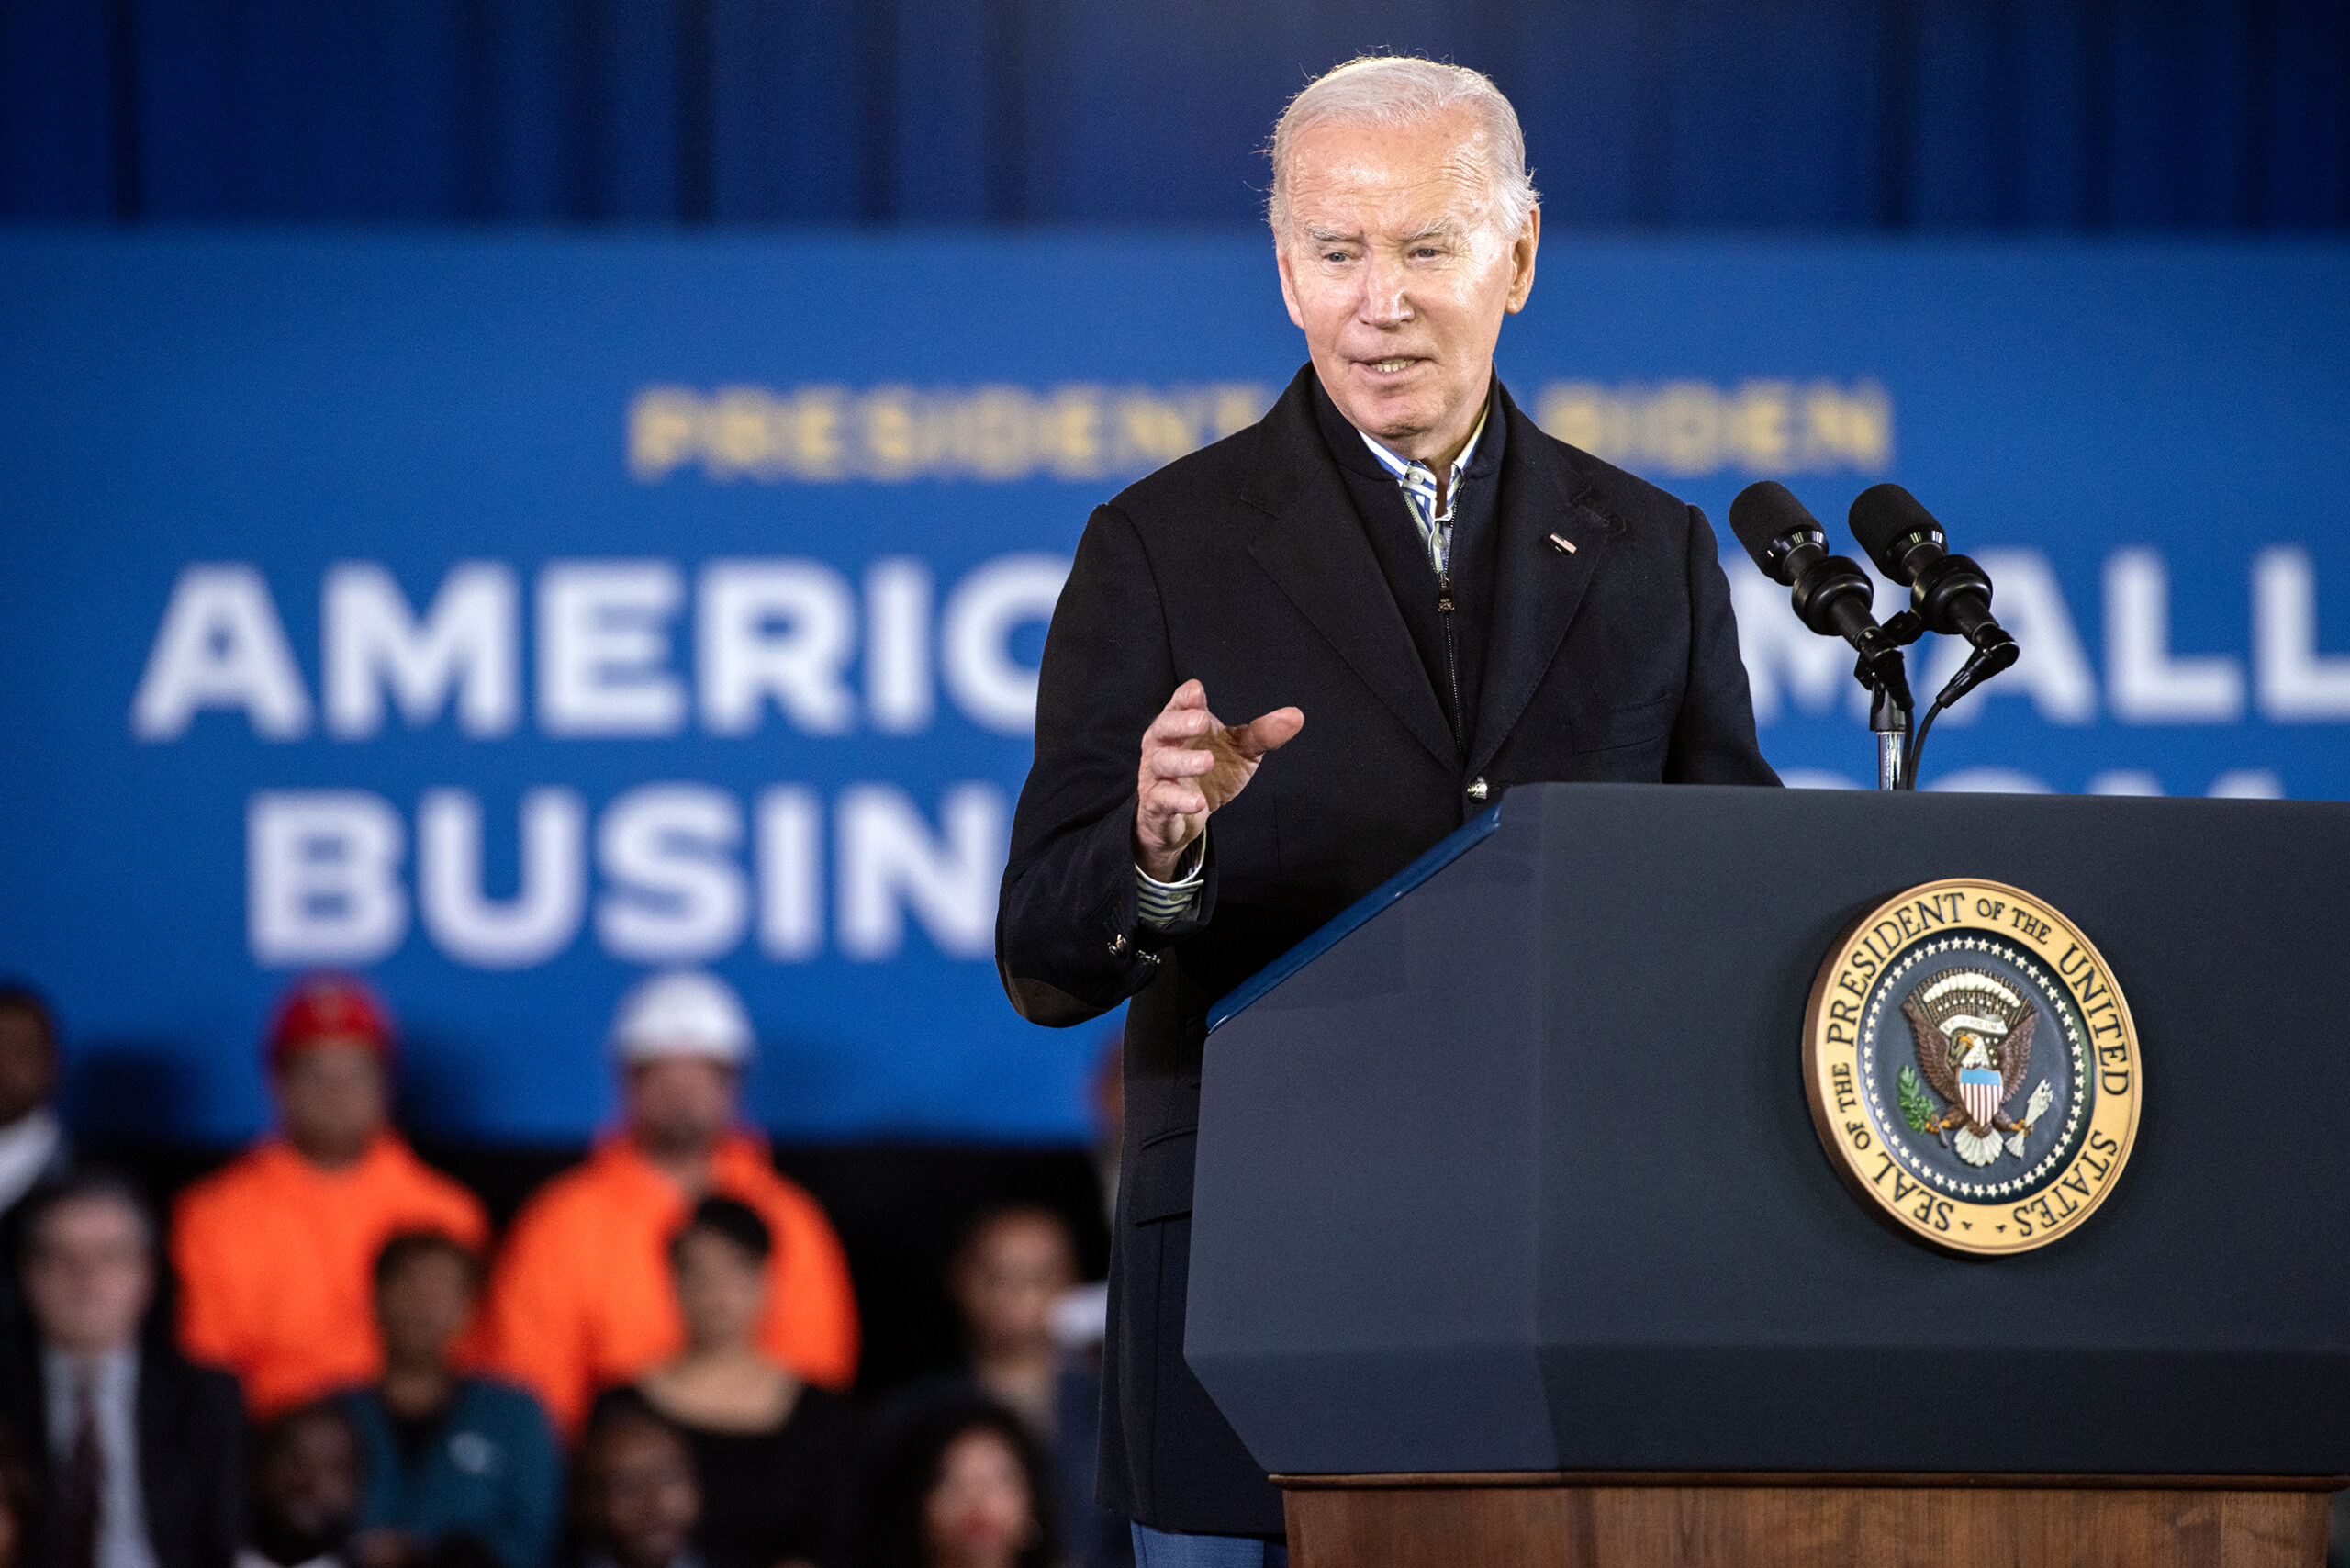 Biden gestures as he speaks from behind a podium.